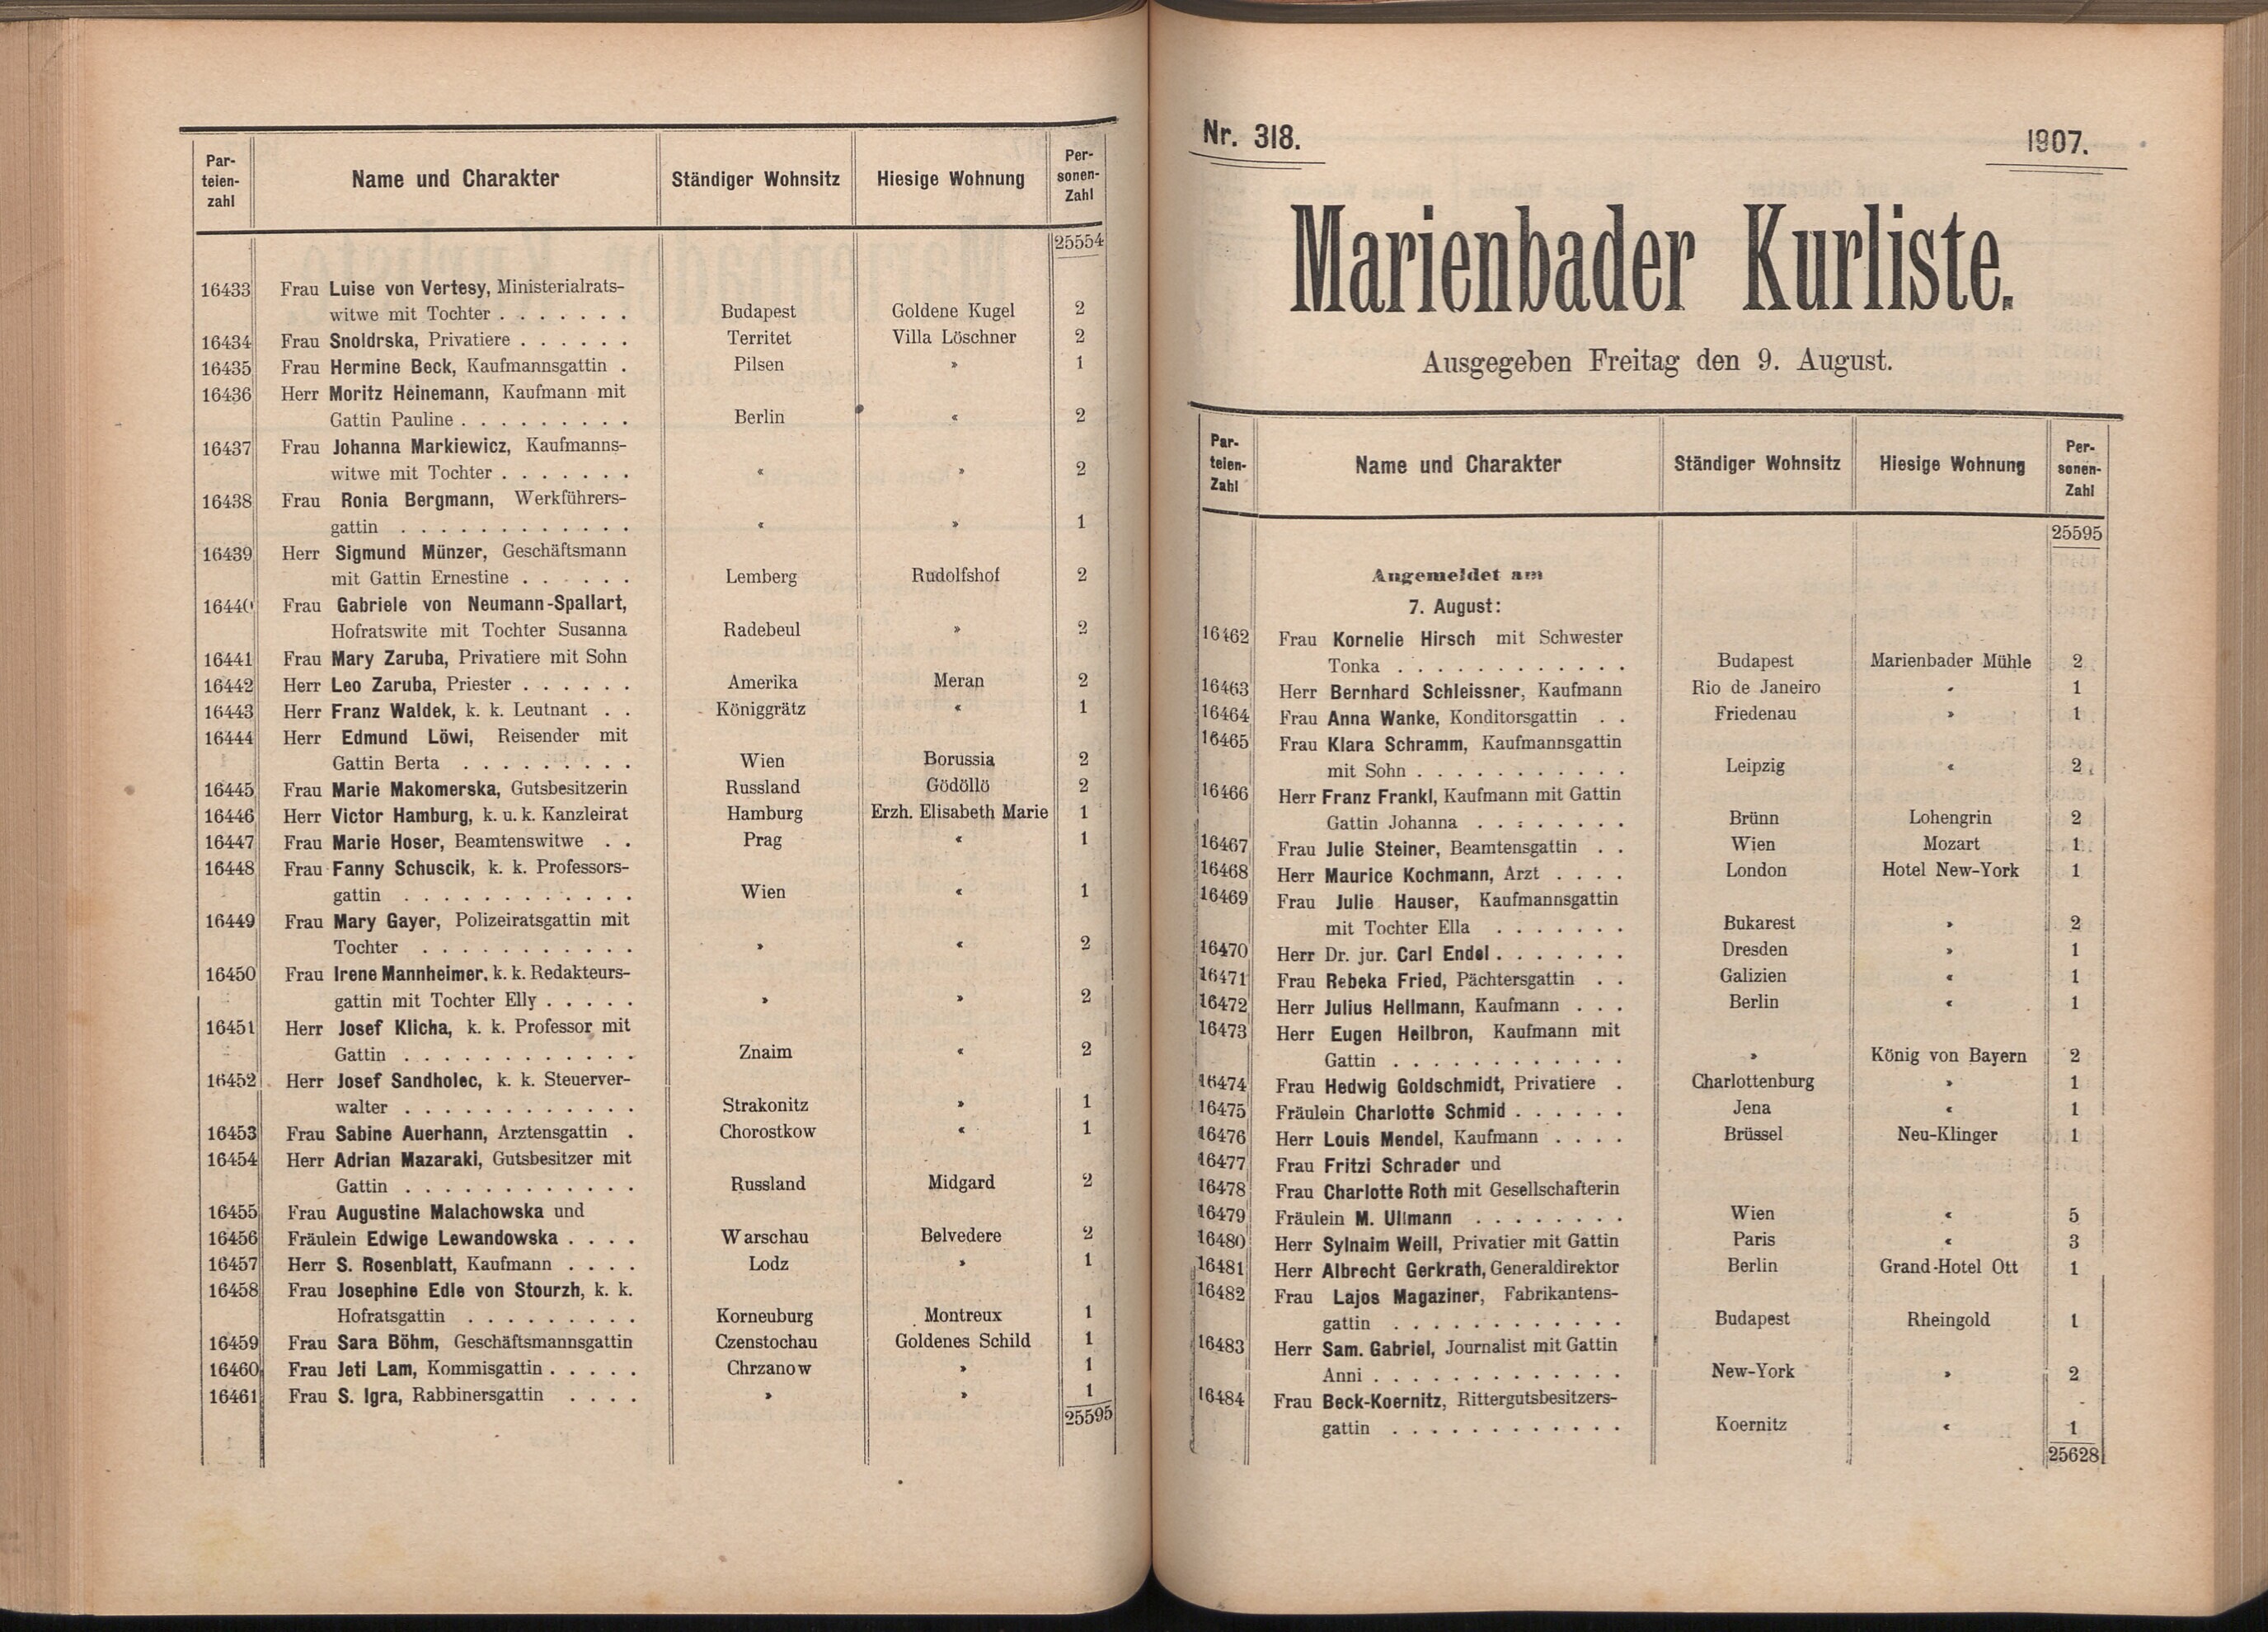 336. soap-ch_knihovna_marienbader-kurliste-1907_3360